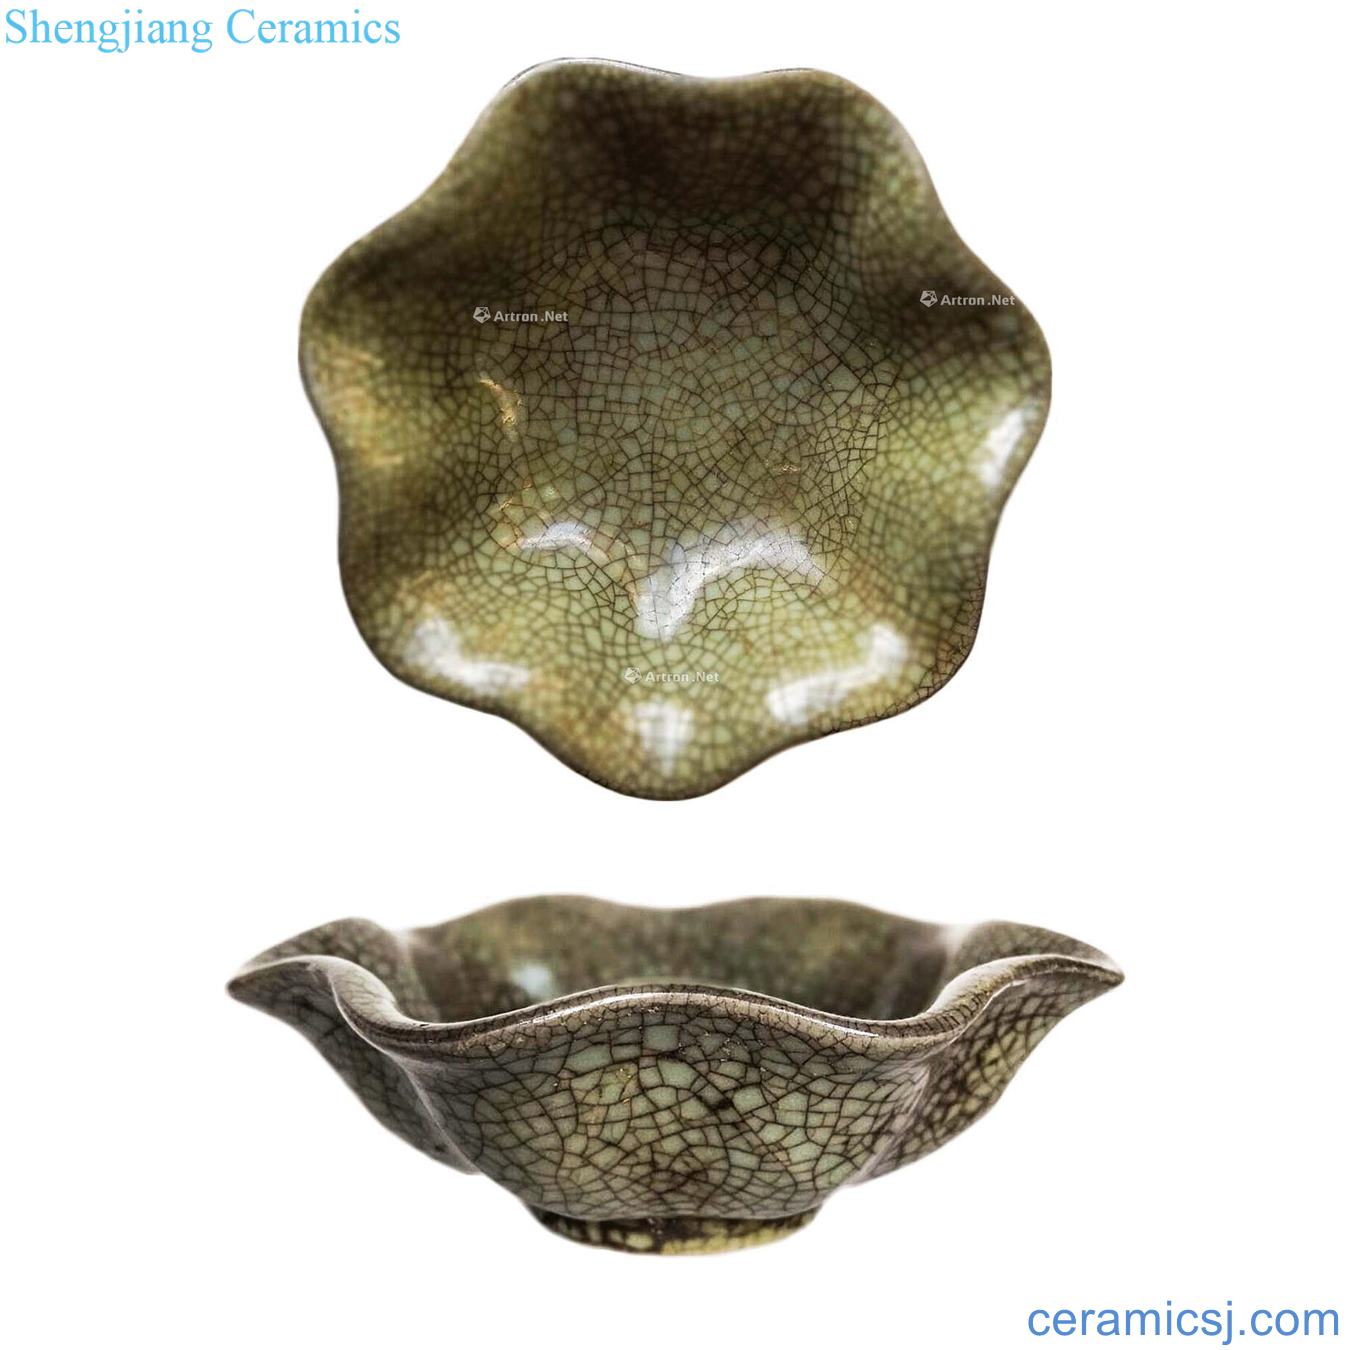 Your kiln mouth lotus flower bowls